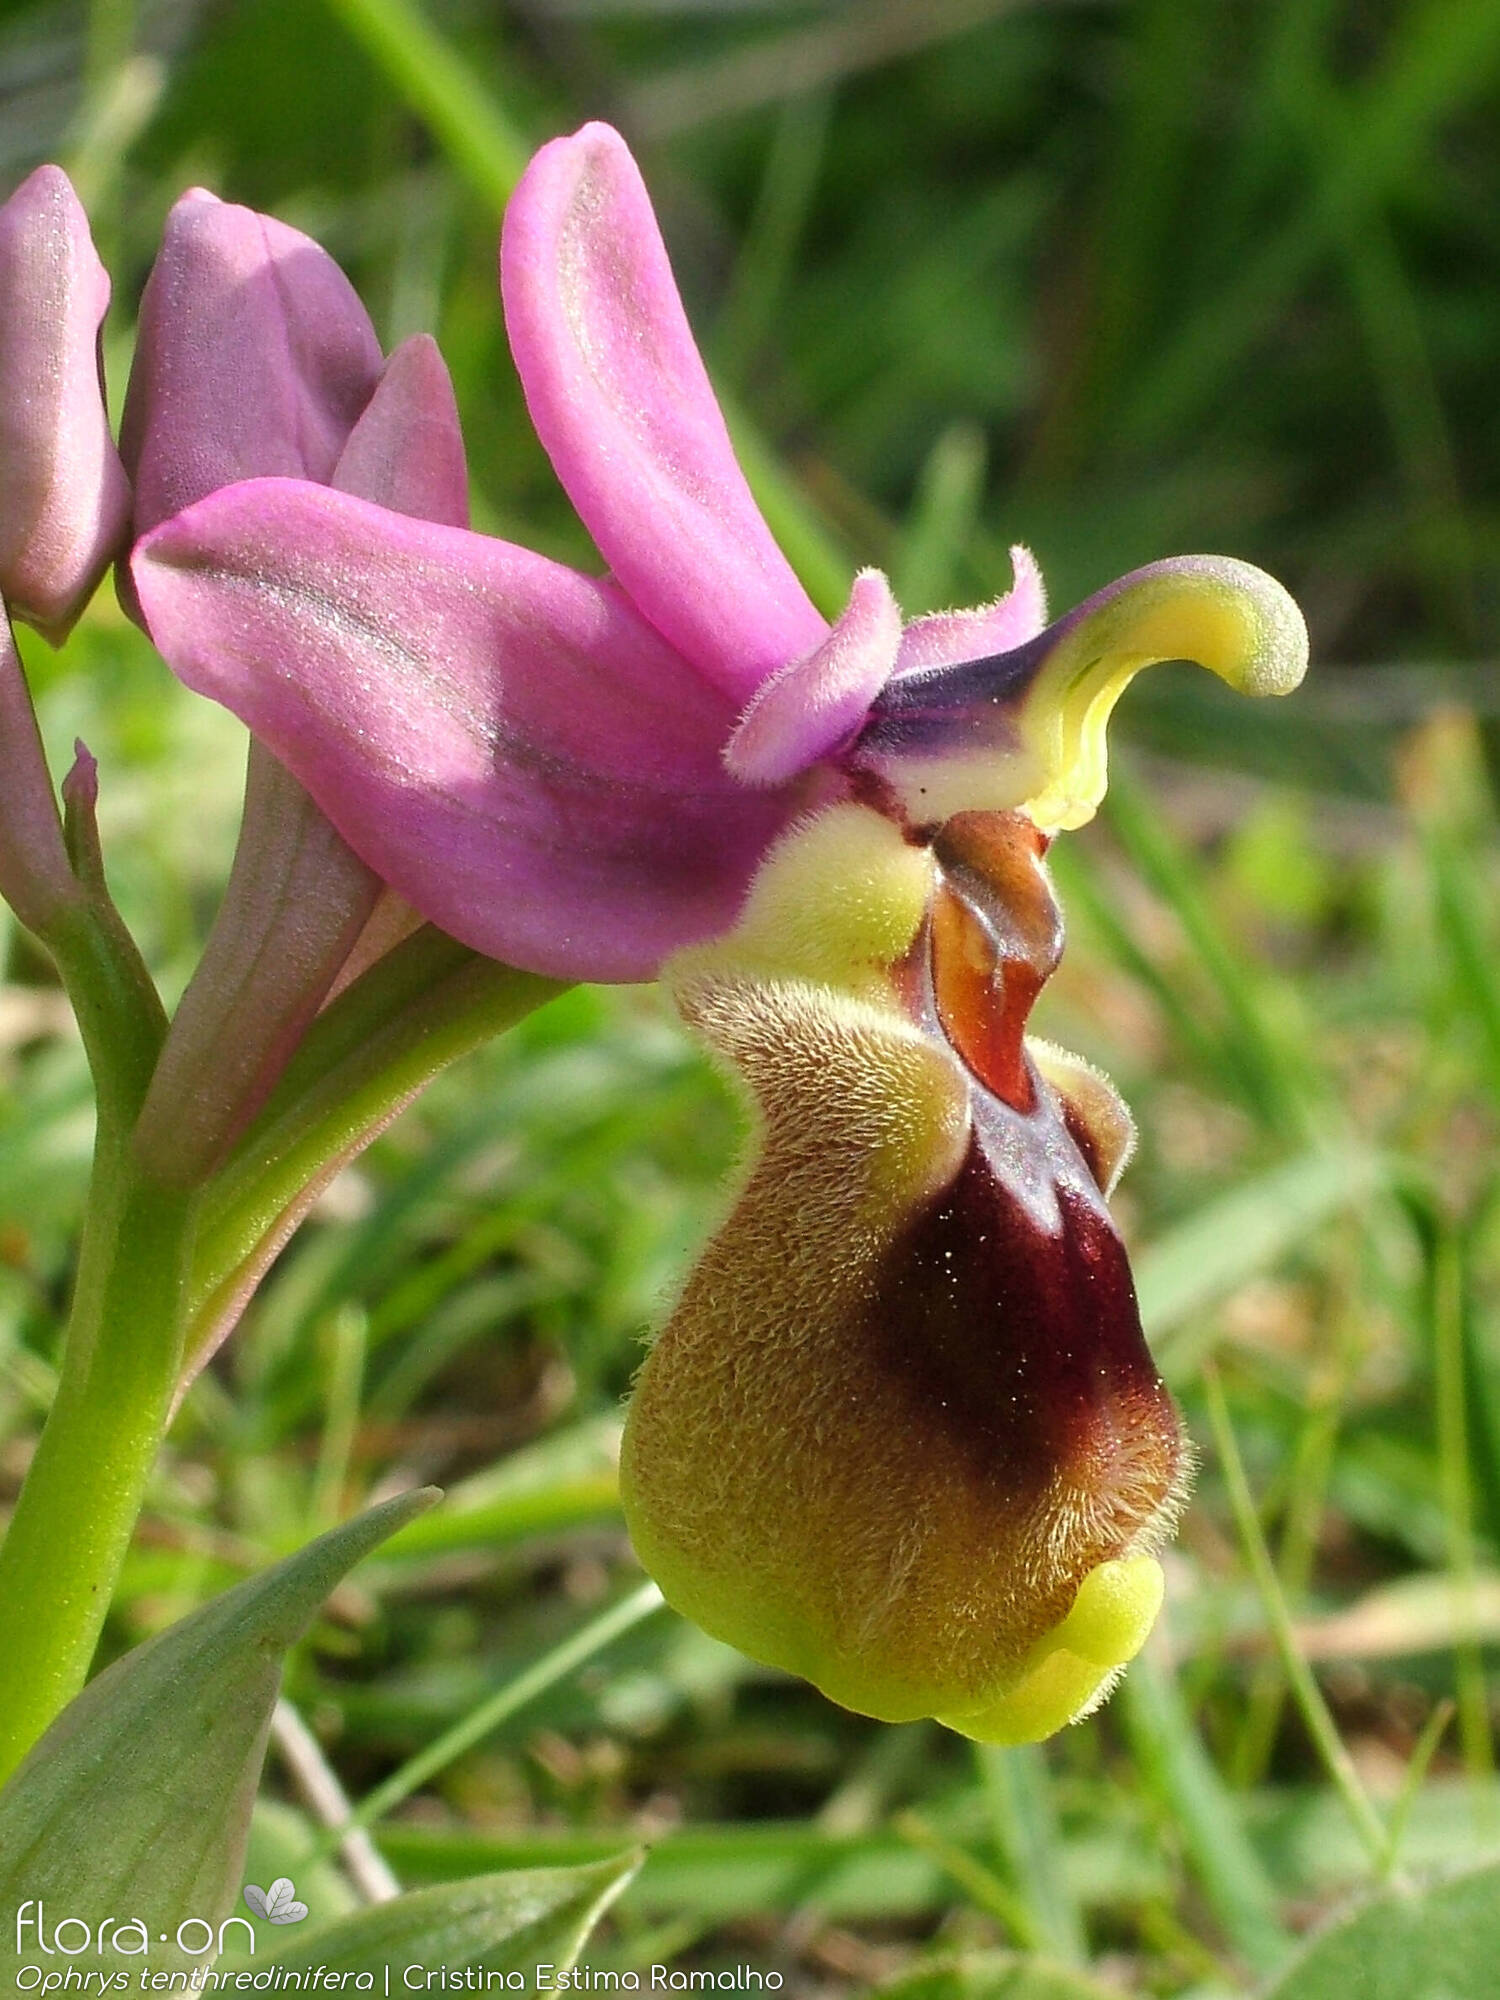 Ophrys tenthredinifera - Flor (close-up) | Cristina Estima Ramalho; CC BY-NC 4.0